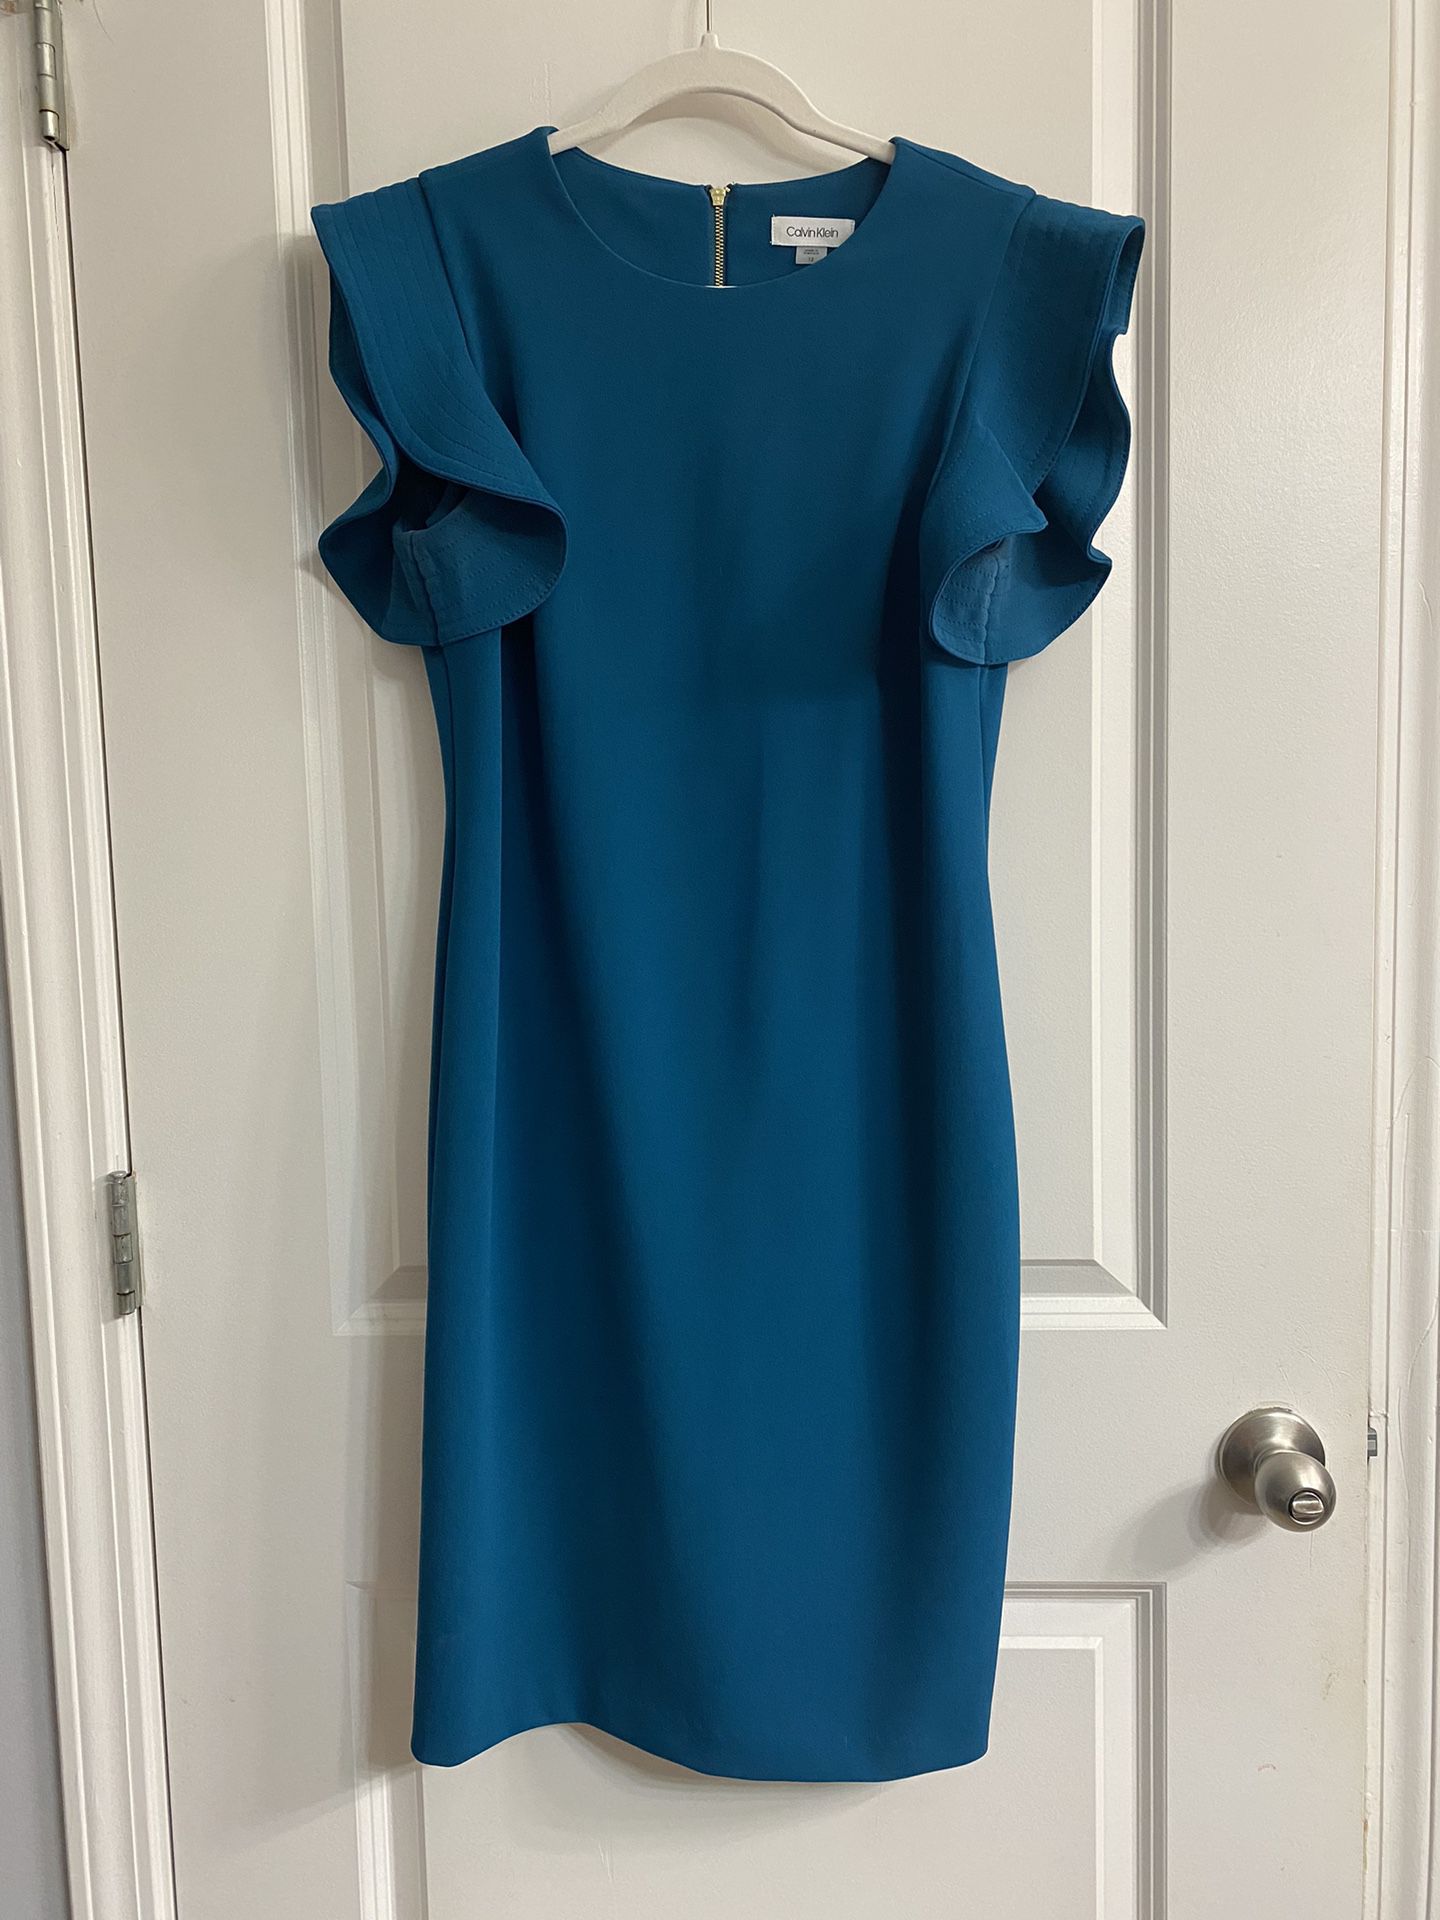 Calvin Klein. Turquoise blue Dress. Size 12